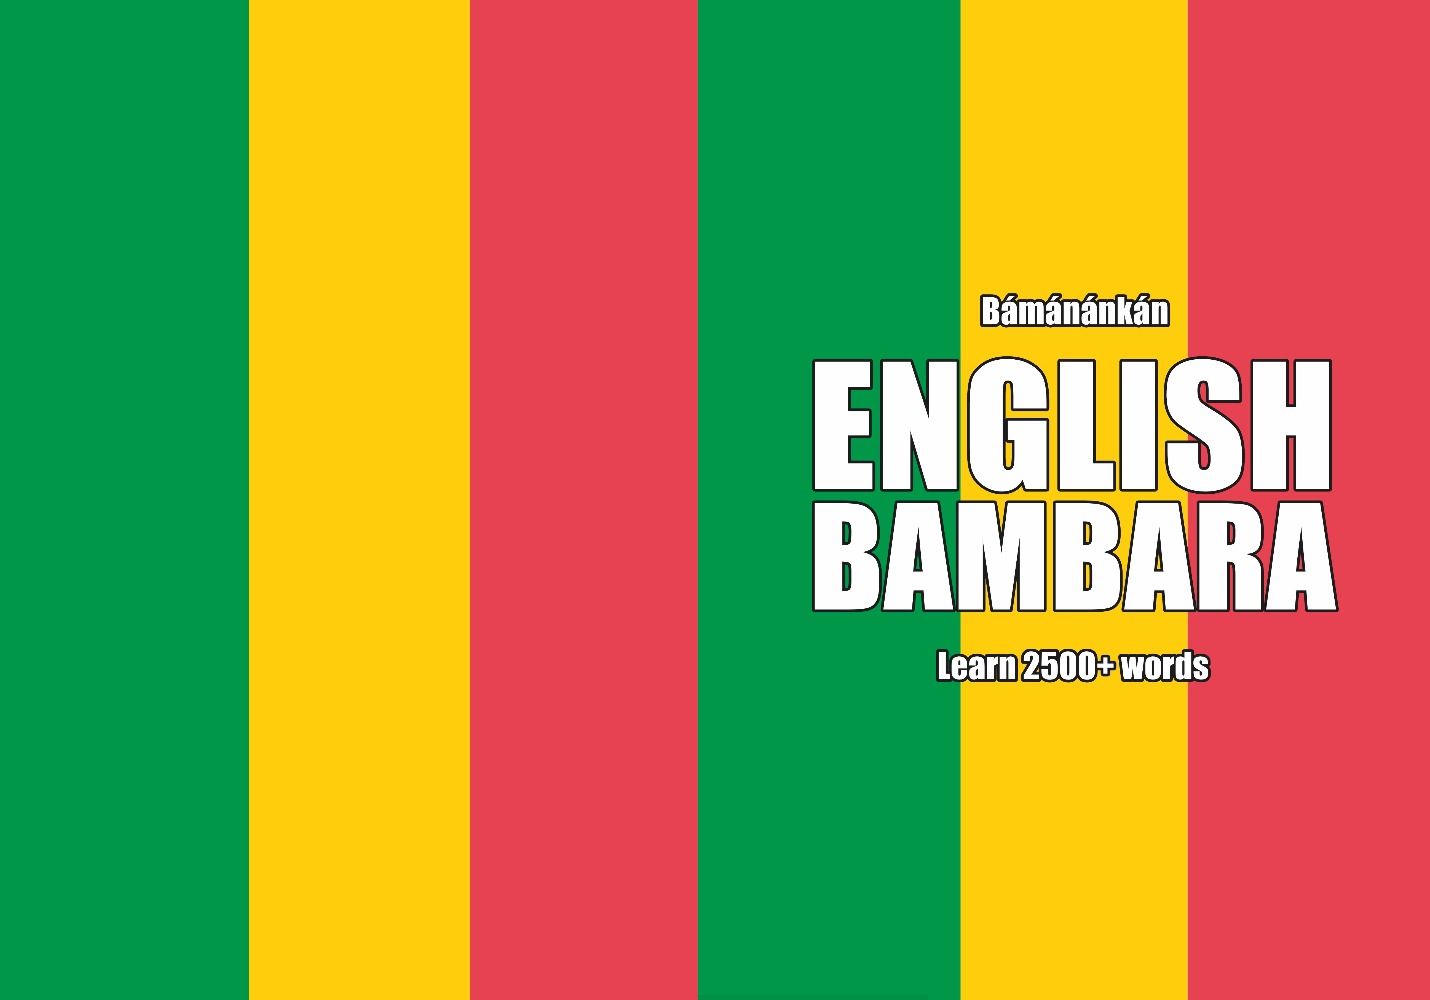 Bambara language learning notebook cover